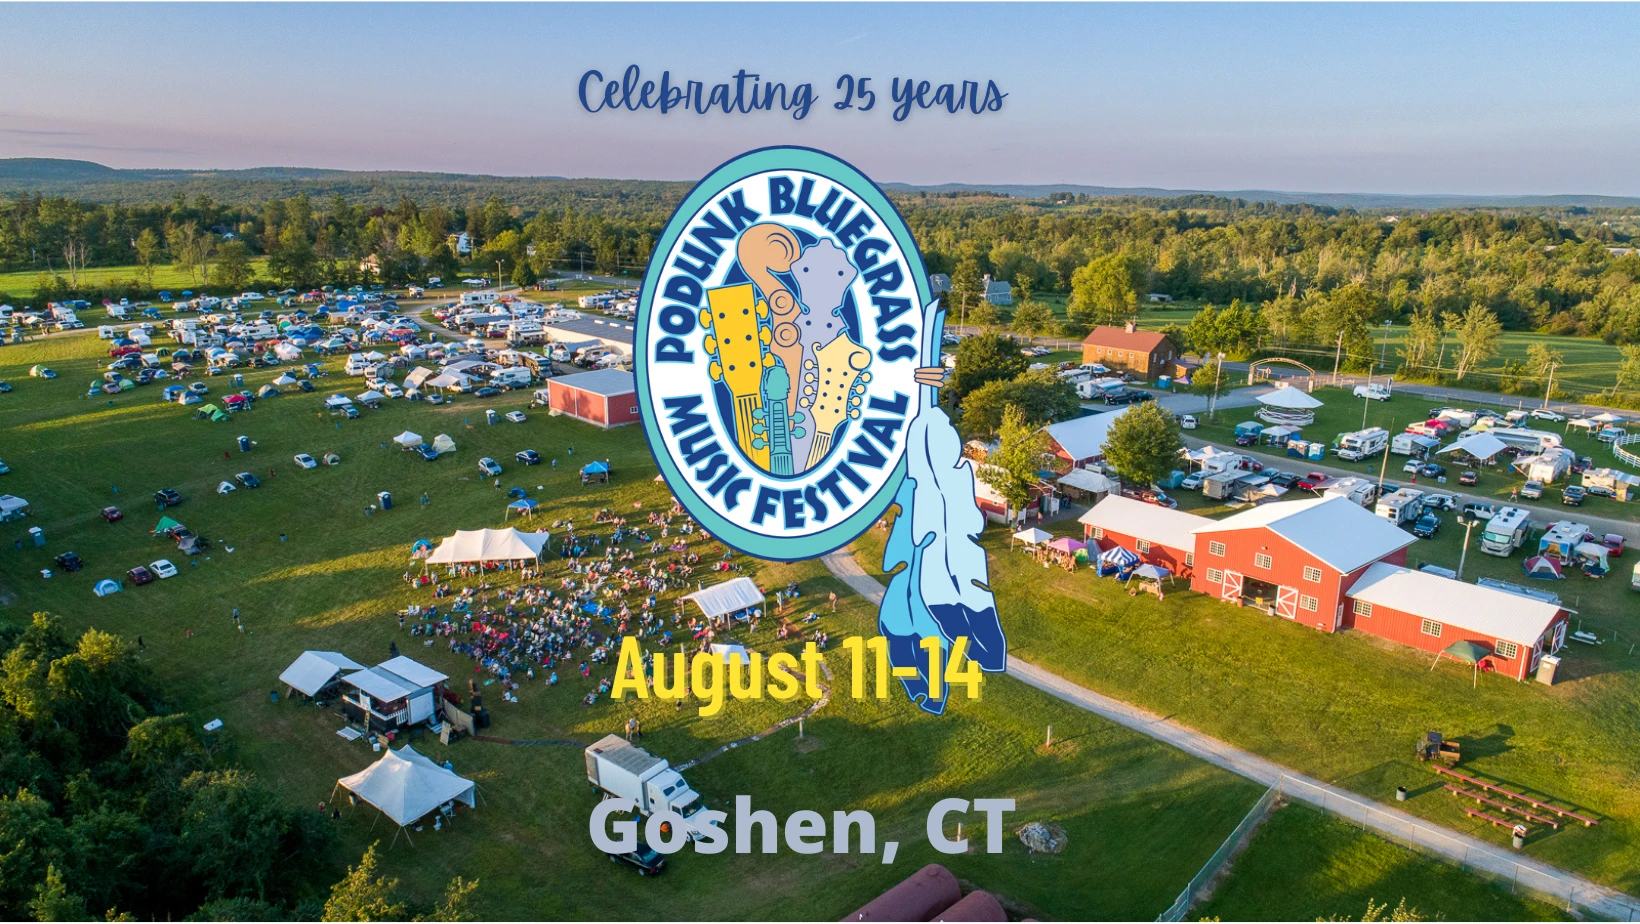 Podunk Bluegrass Festival - Aug 11-14, 2022 - Goshen, CT